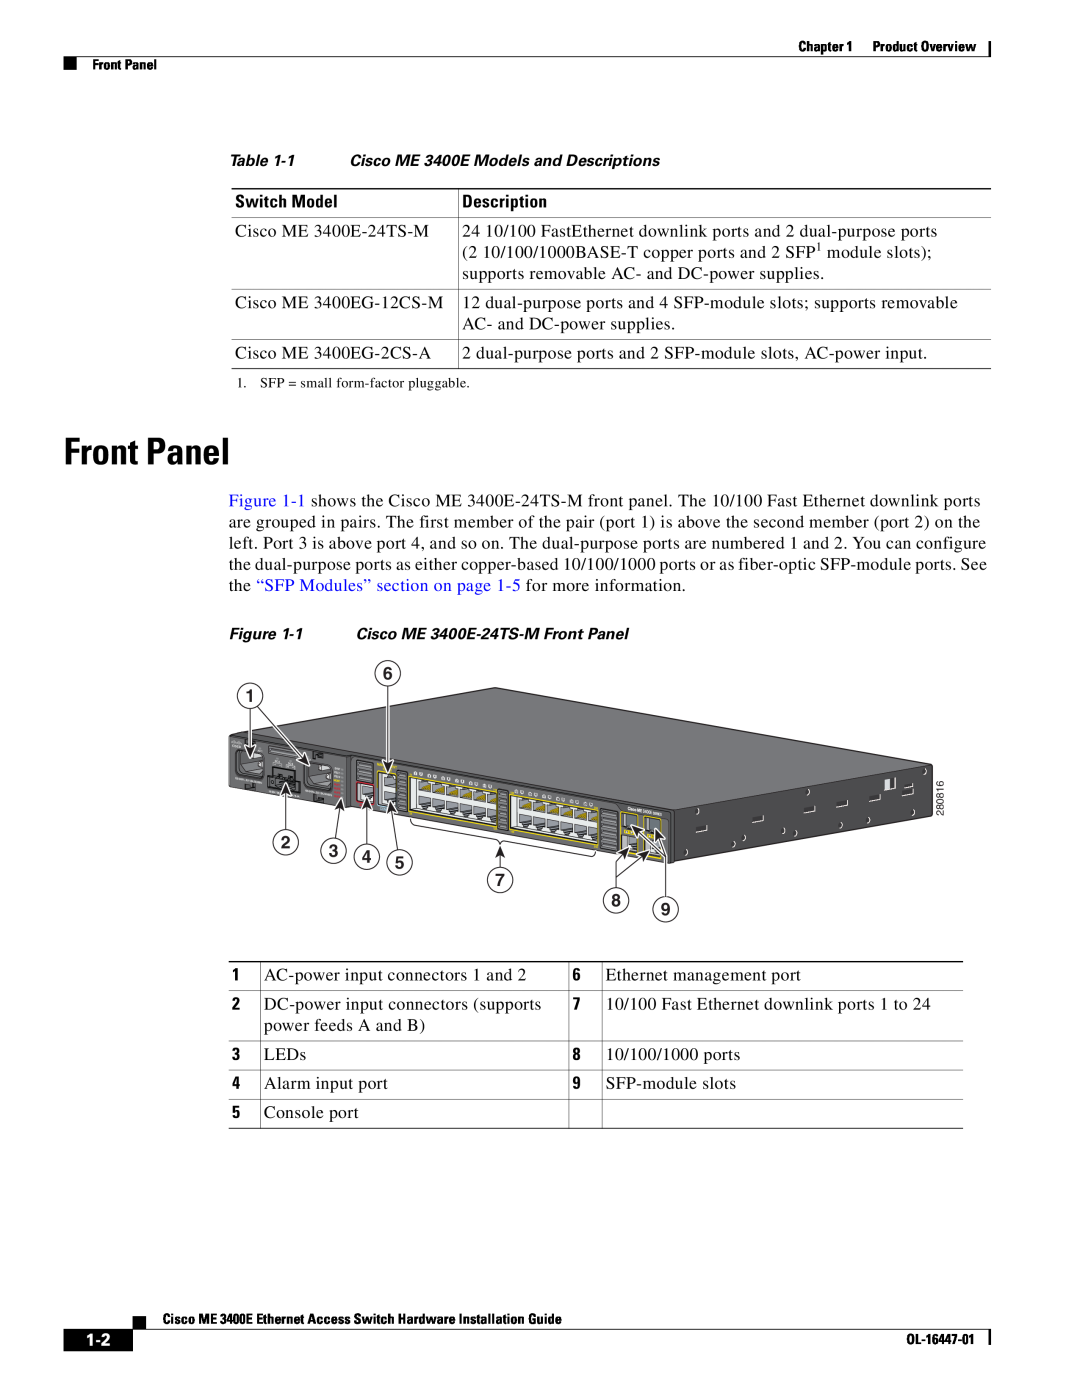 Cisco Systems OL-16447-01 manual Front Panel, Switch Model, Description 